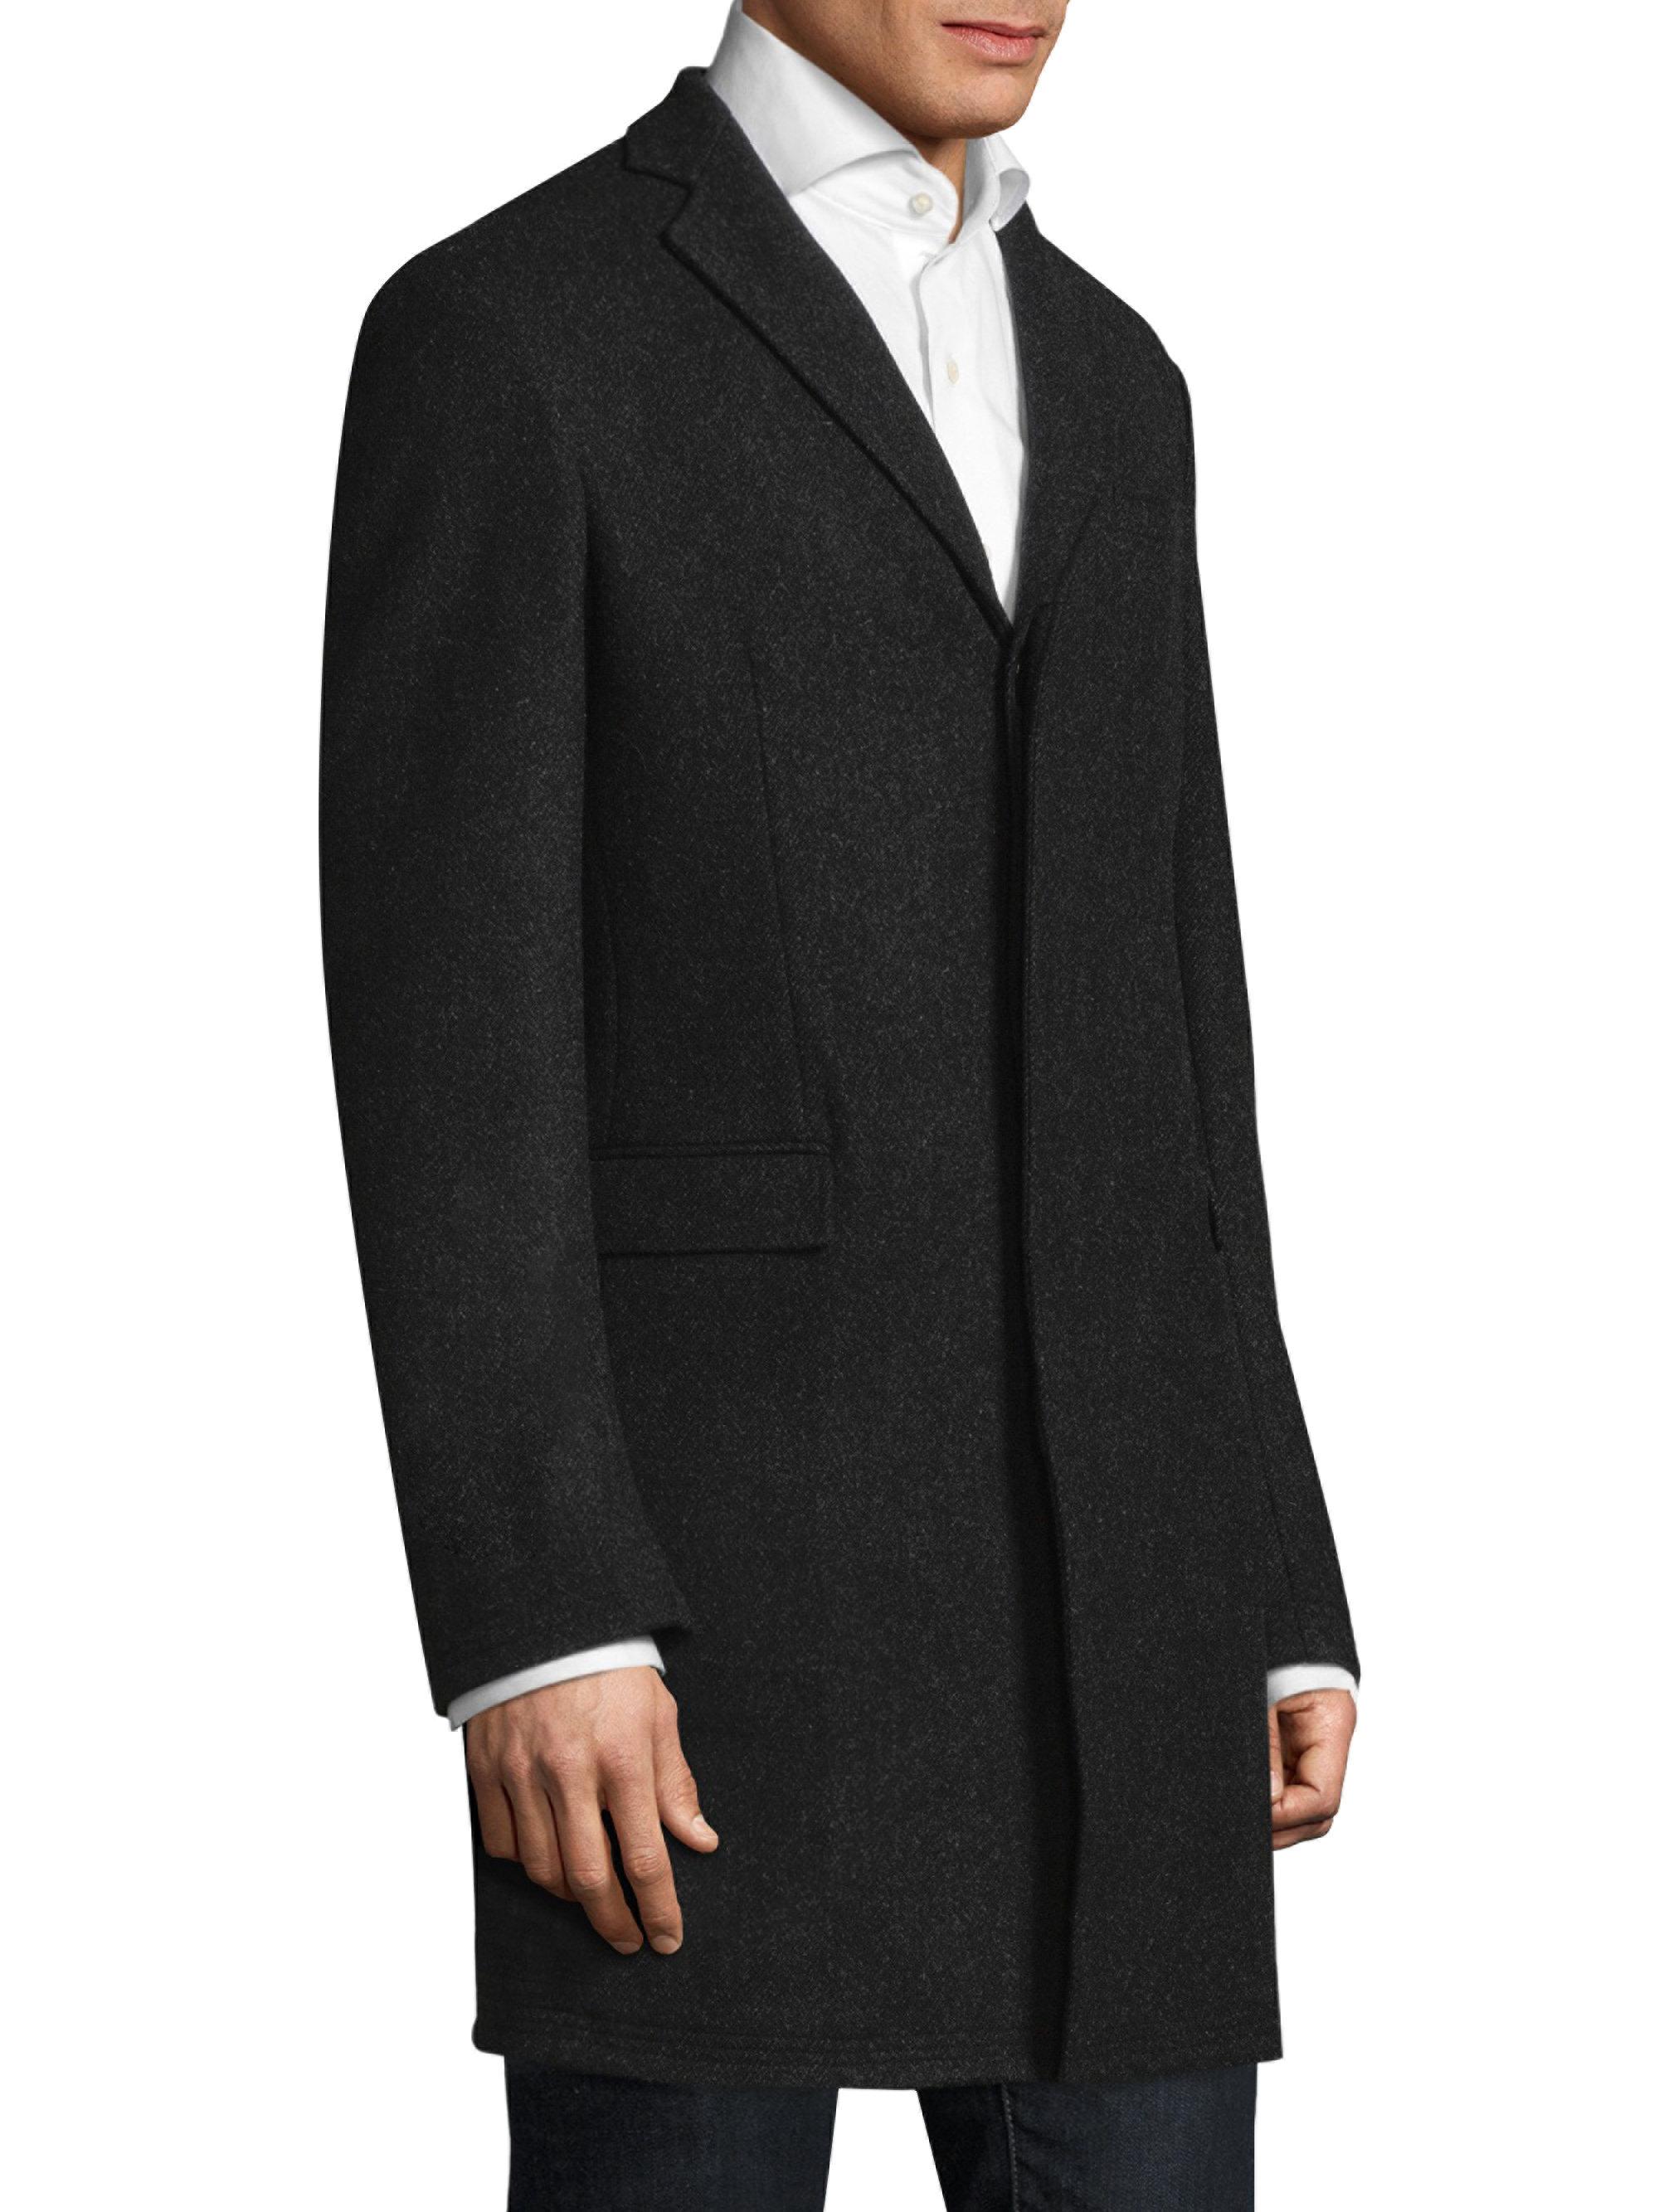 Polo Ralph Lauren Wool Morgan Paddock Top Coat in Charcoal Black (Black)  for Men - Lyst